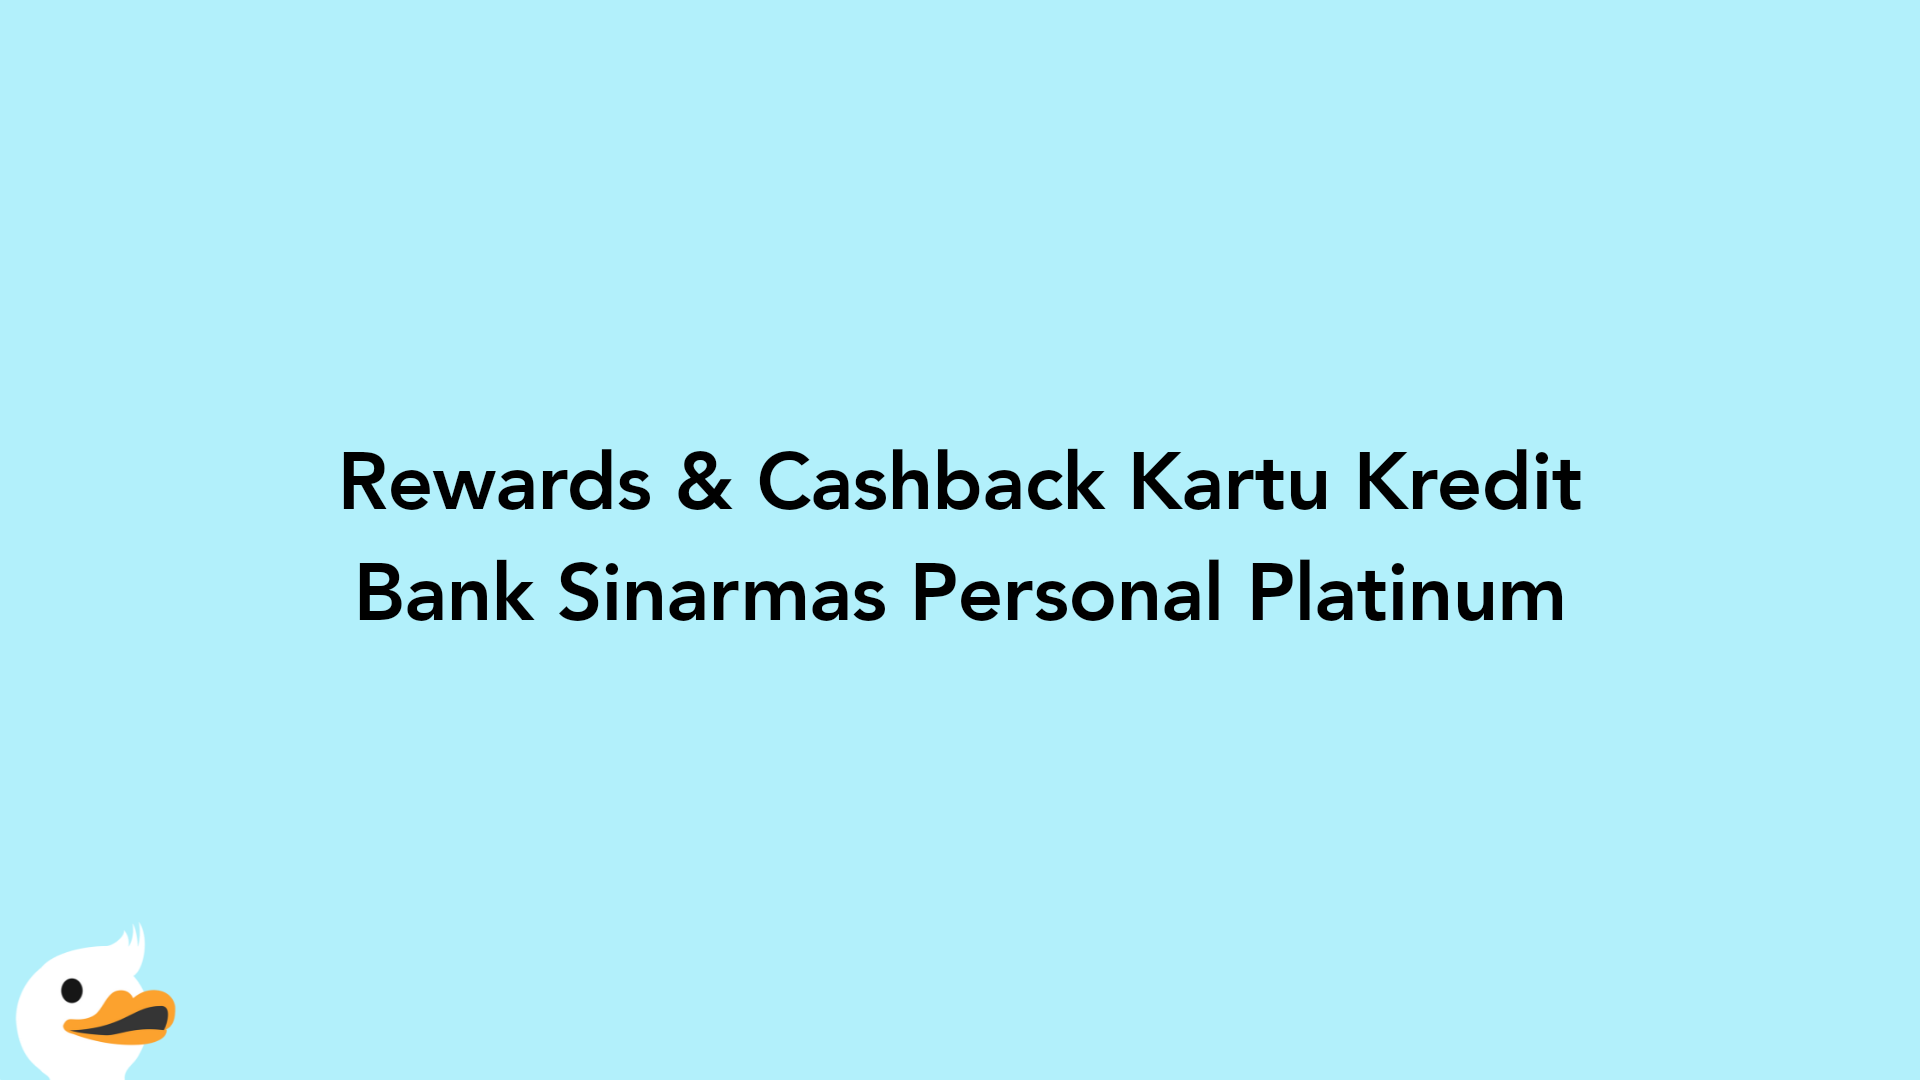 Rewards & Cashback Kartu Kredit Bank Sinarmas Personal Platinum